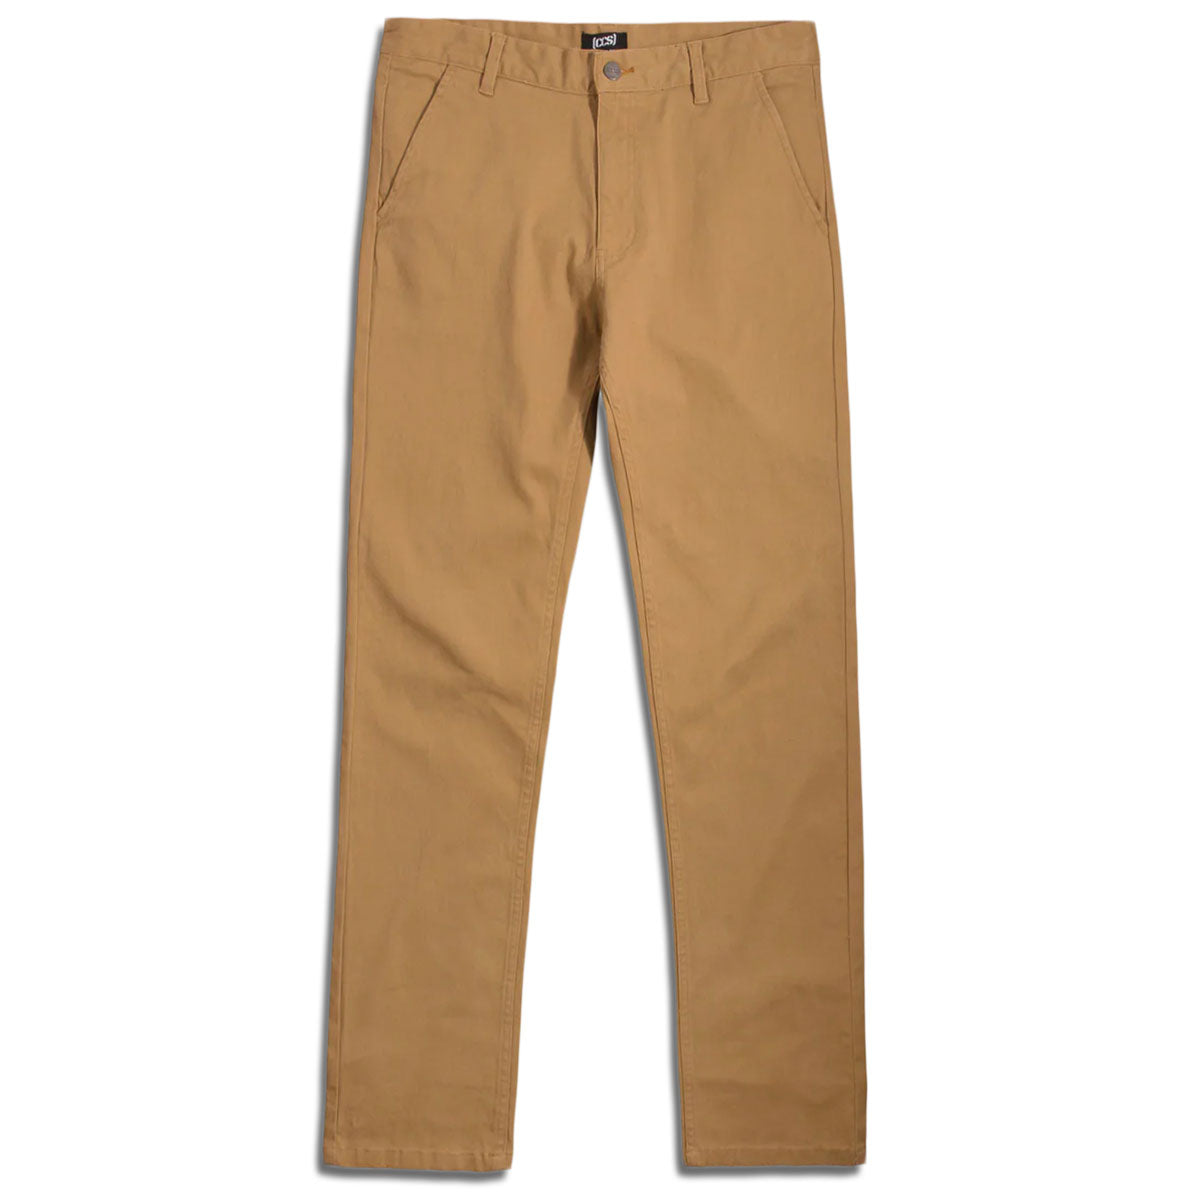 CCS Standard Plus Straight Chino Pants - Khaki image 5